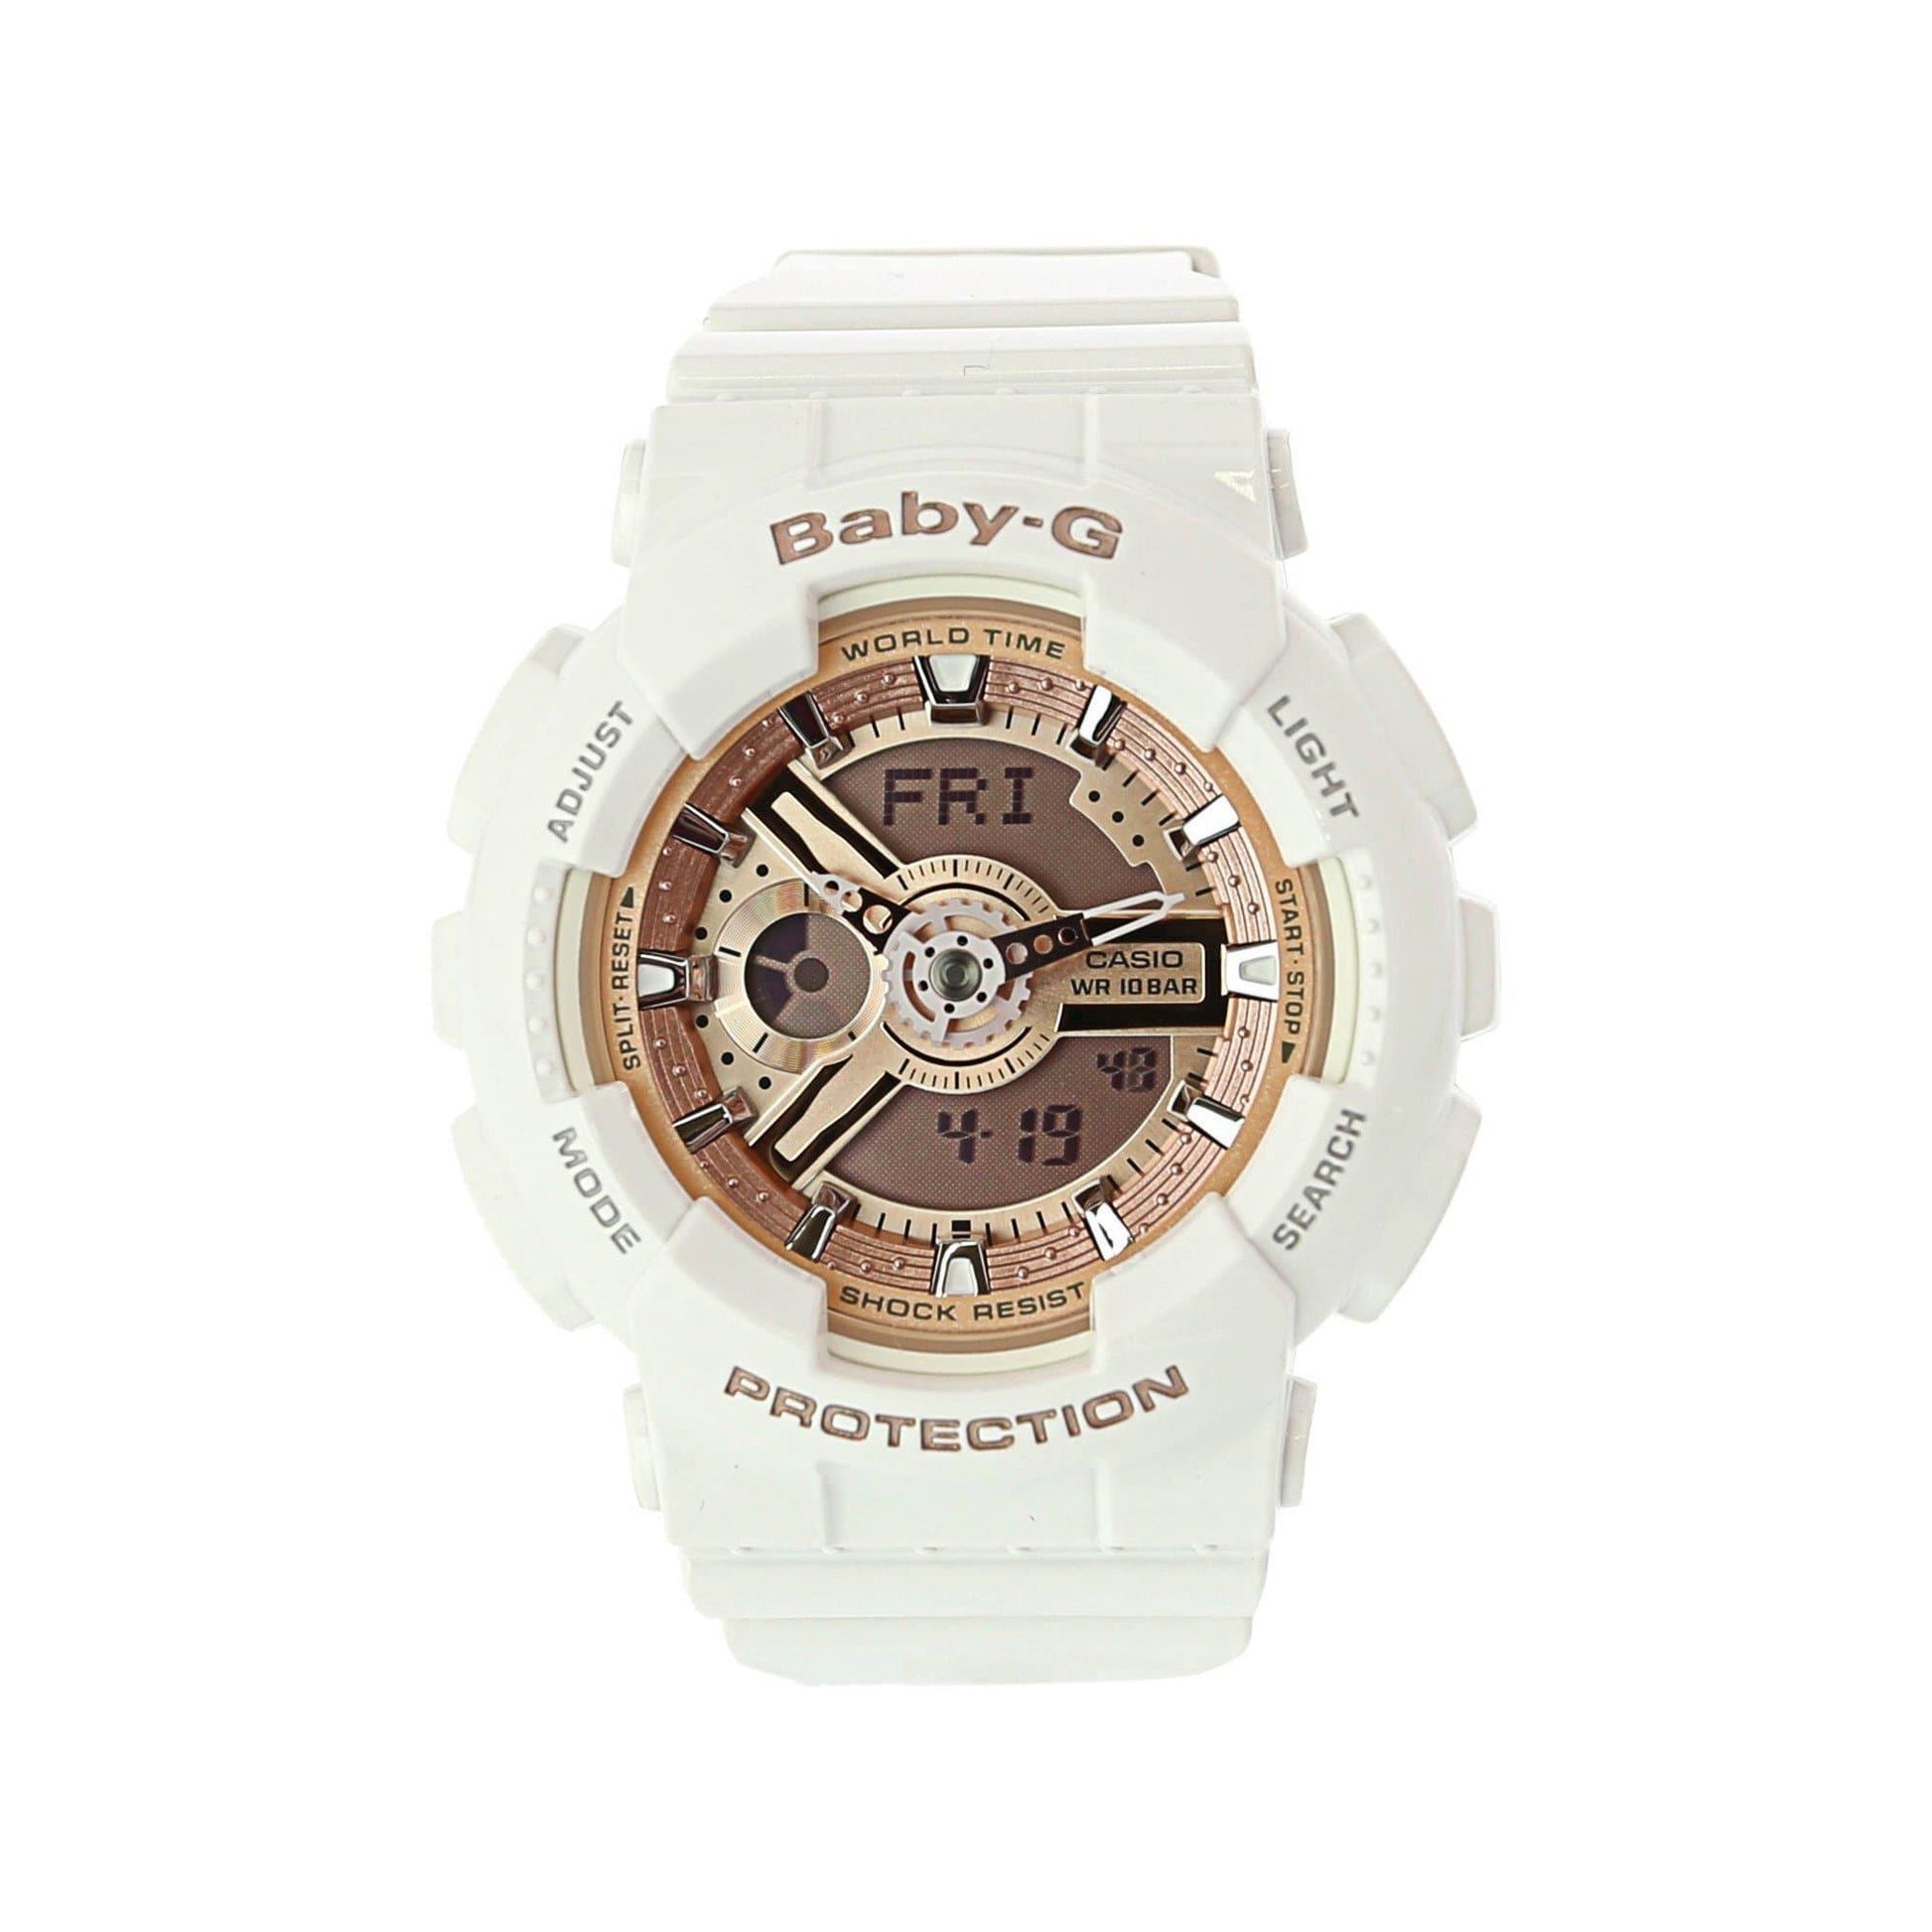 Casio Baby-G BA110 Series Analog-Digital White x Rose Gold Dial Watch BA110-7A1DR - Diligence1International